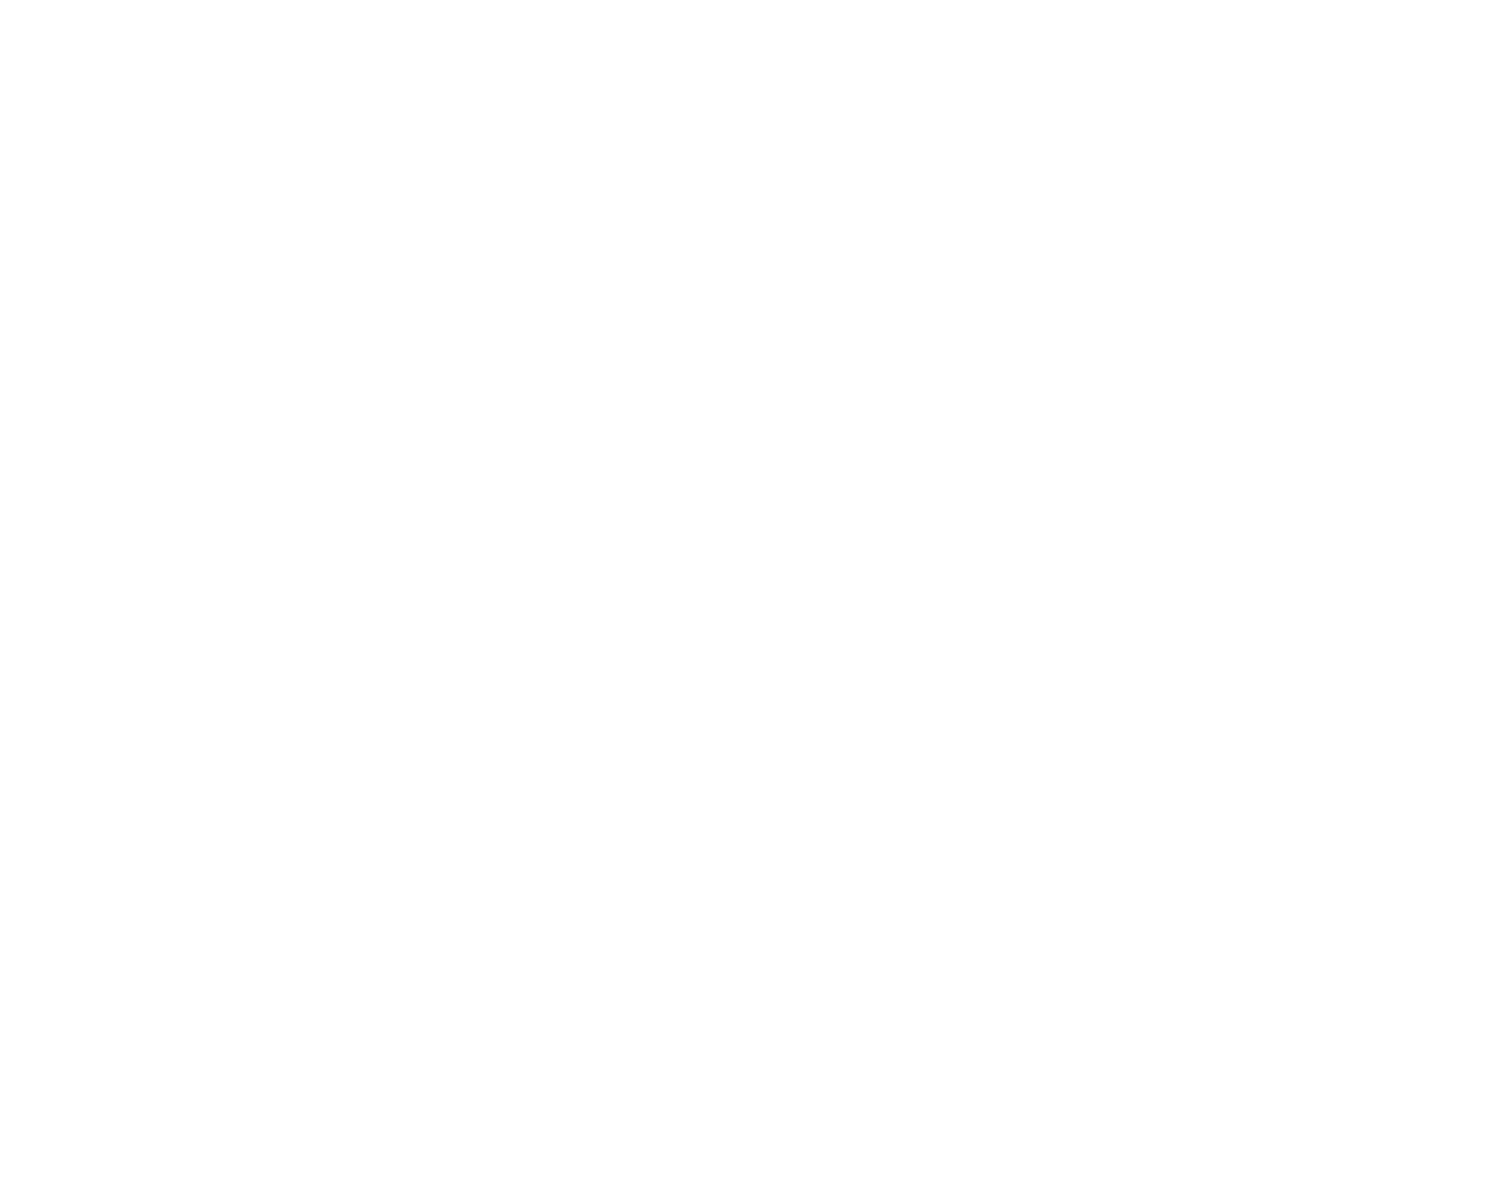 Yoga Nature